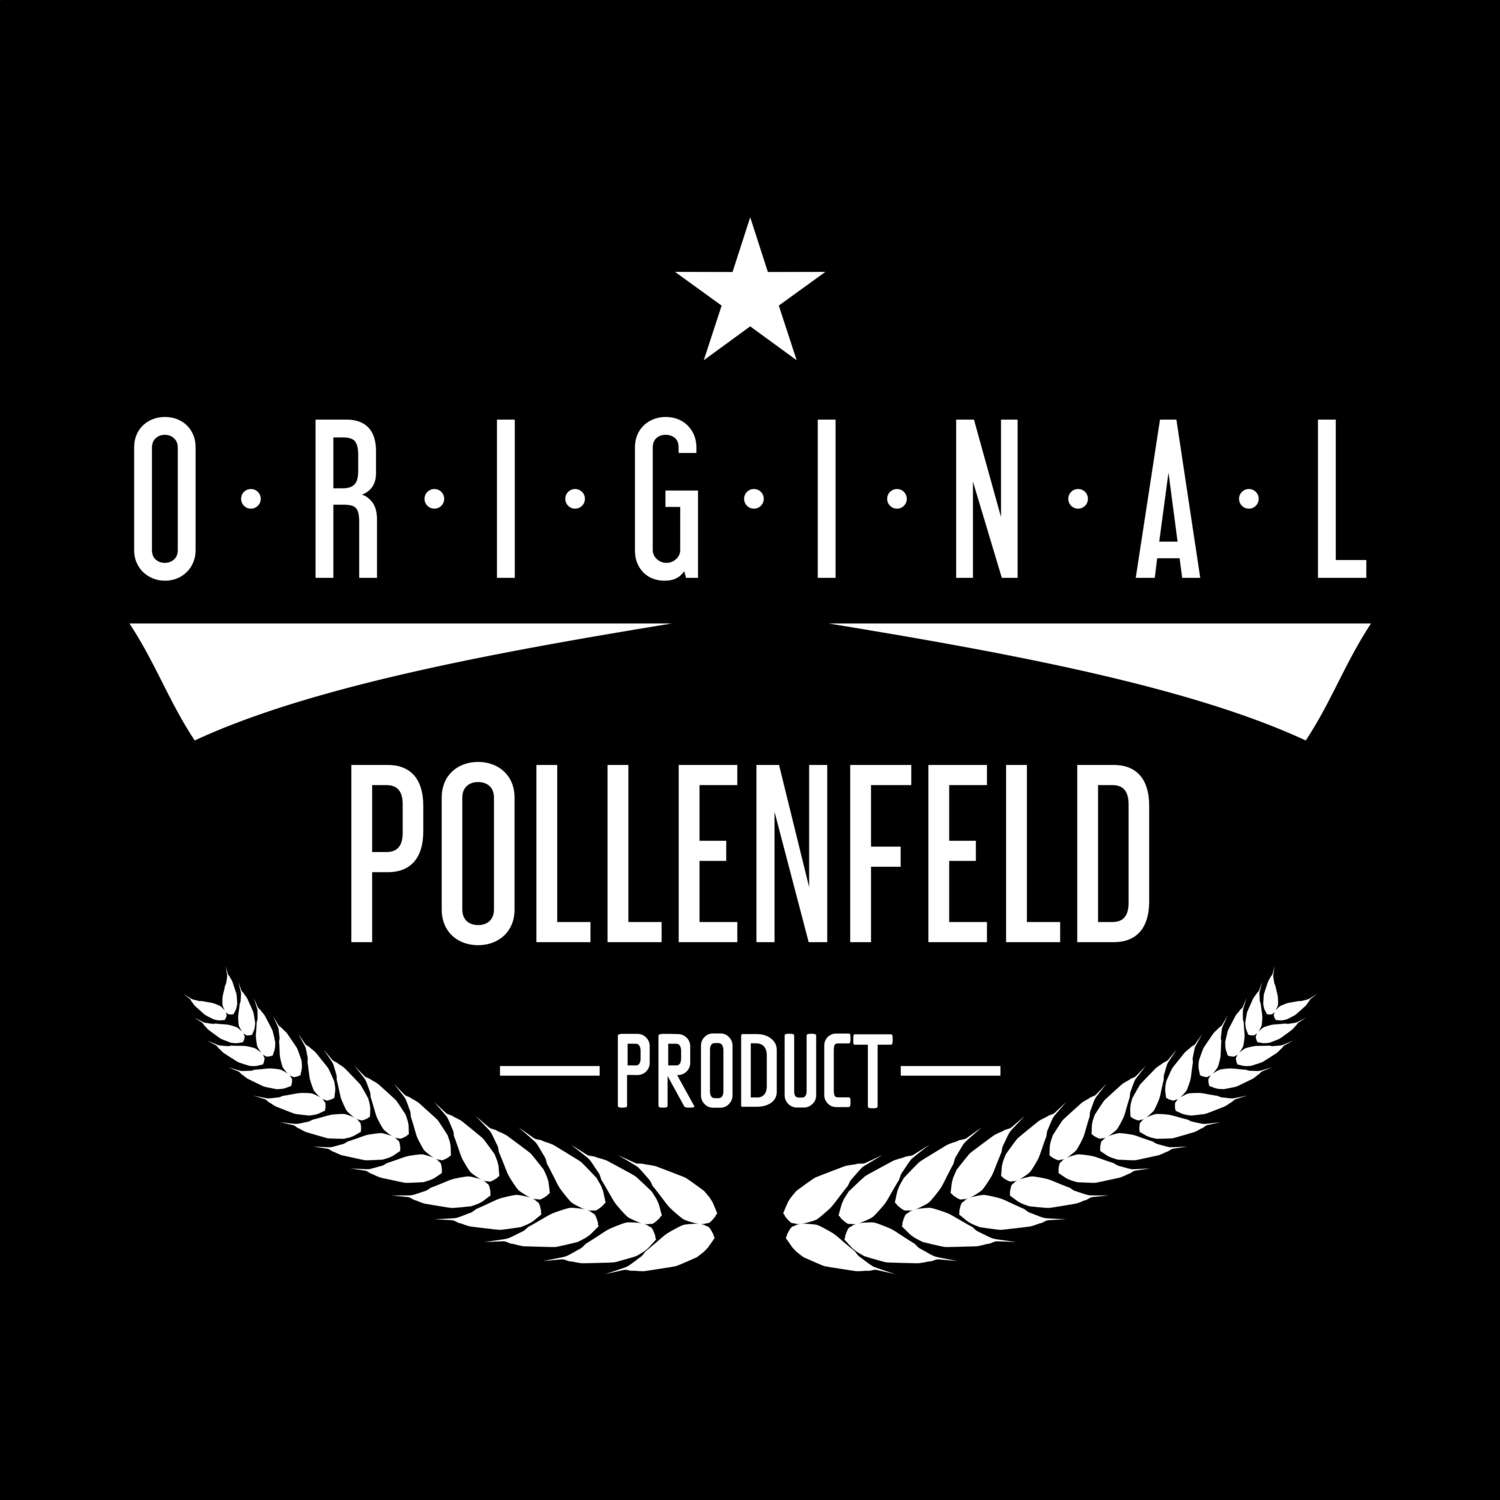 Pollenfeld T-Shirt »Original Product«